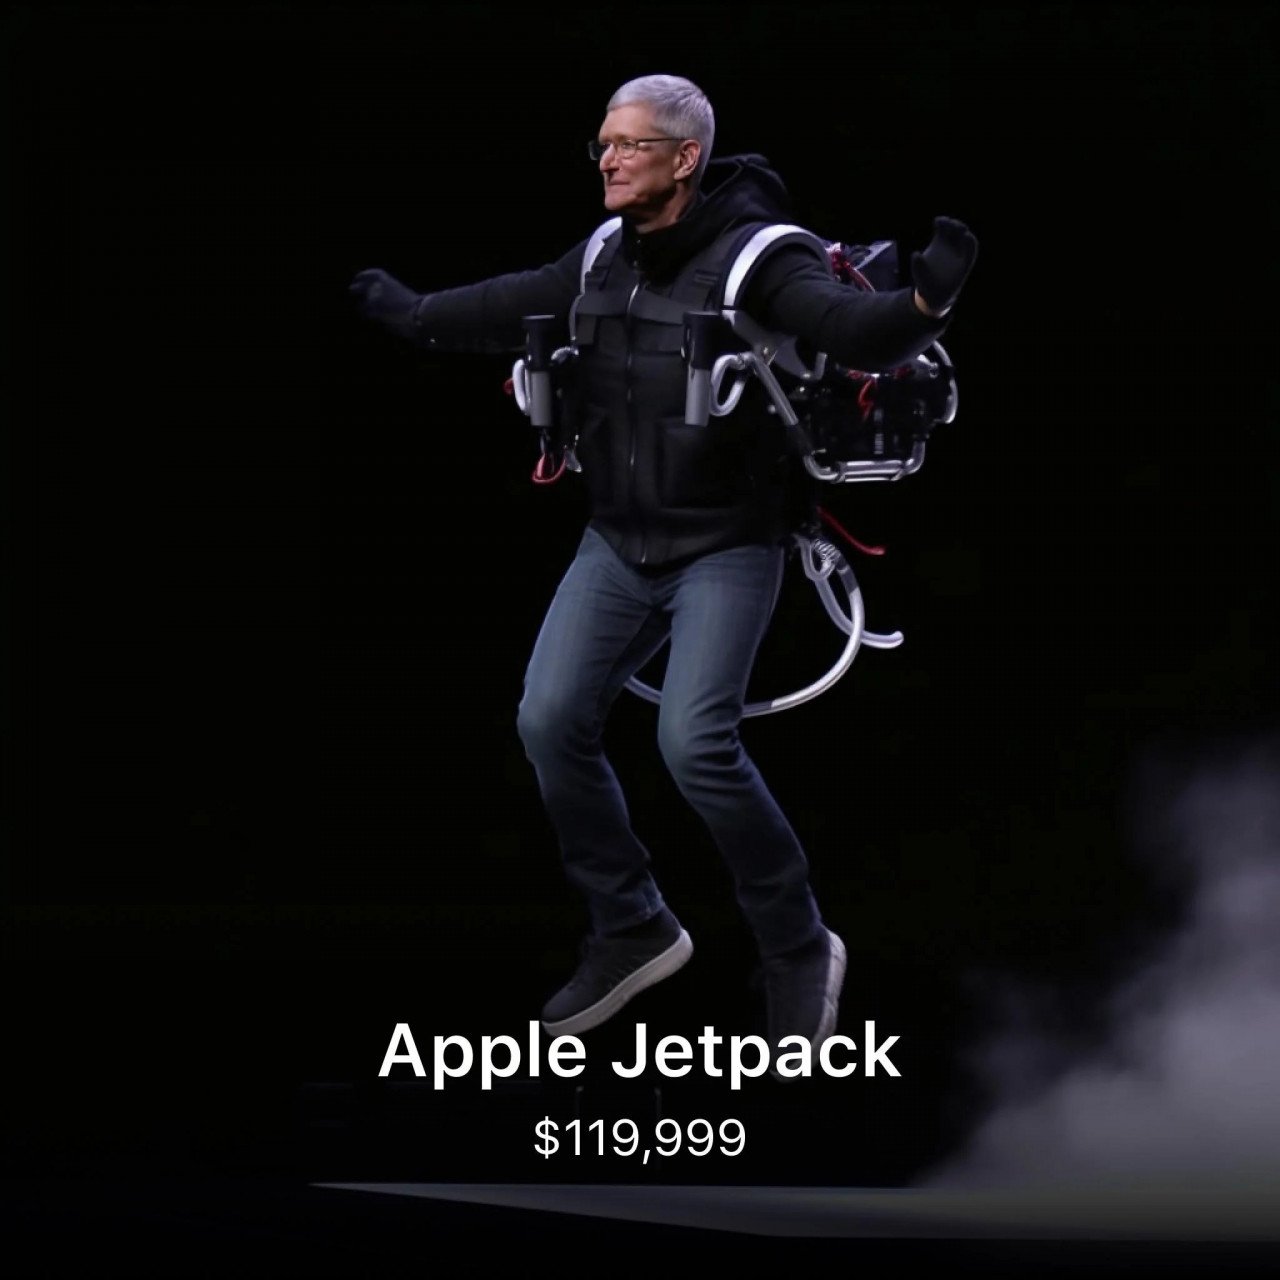 Apple Jetpack